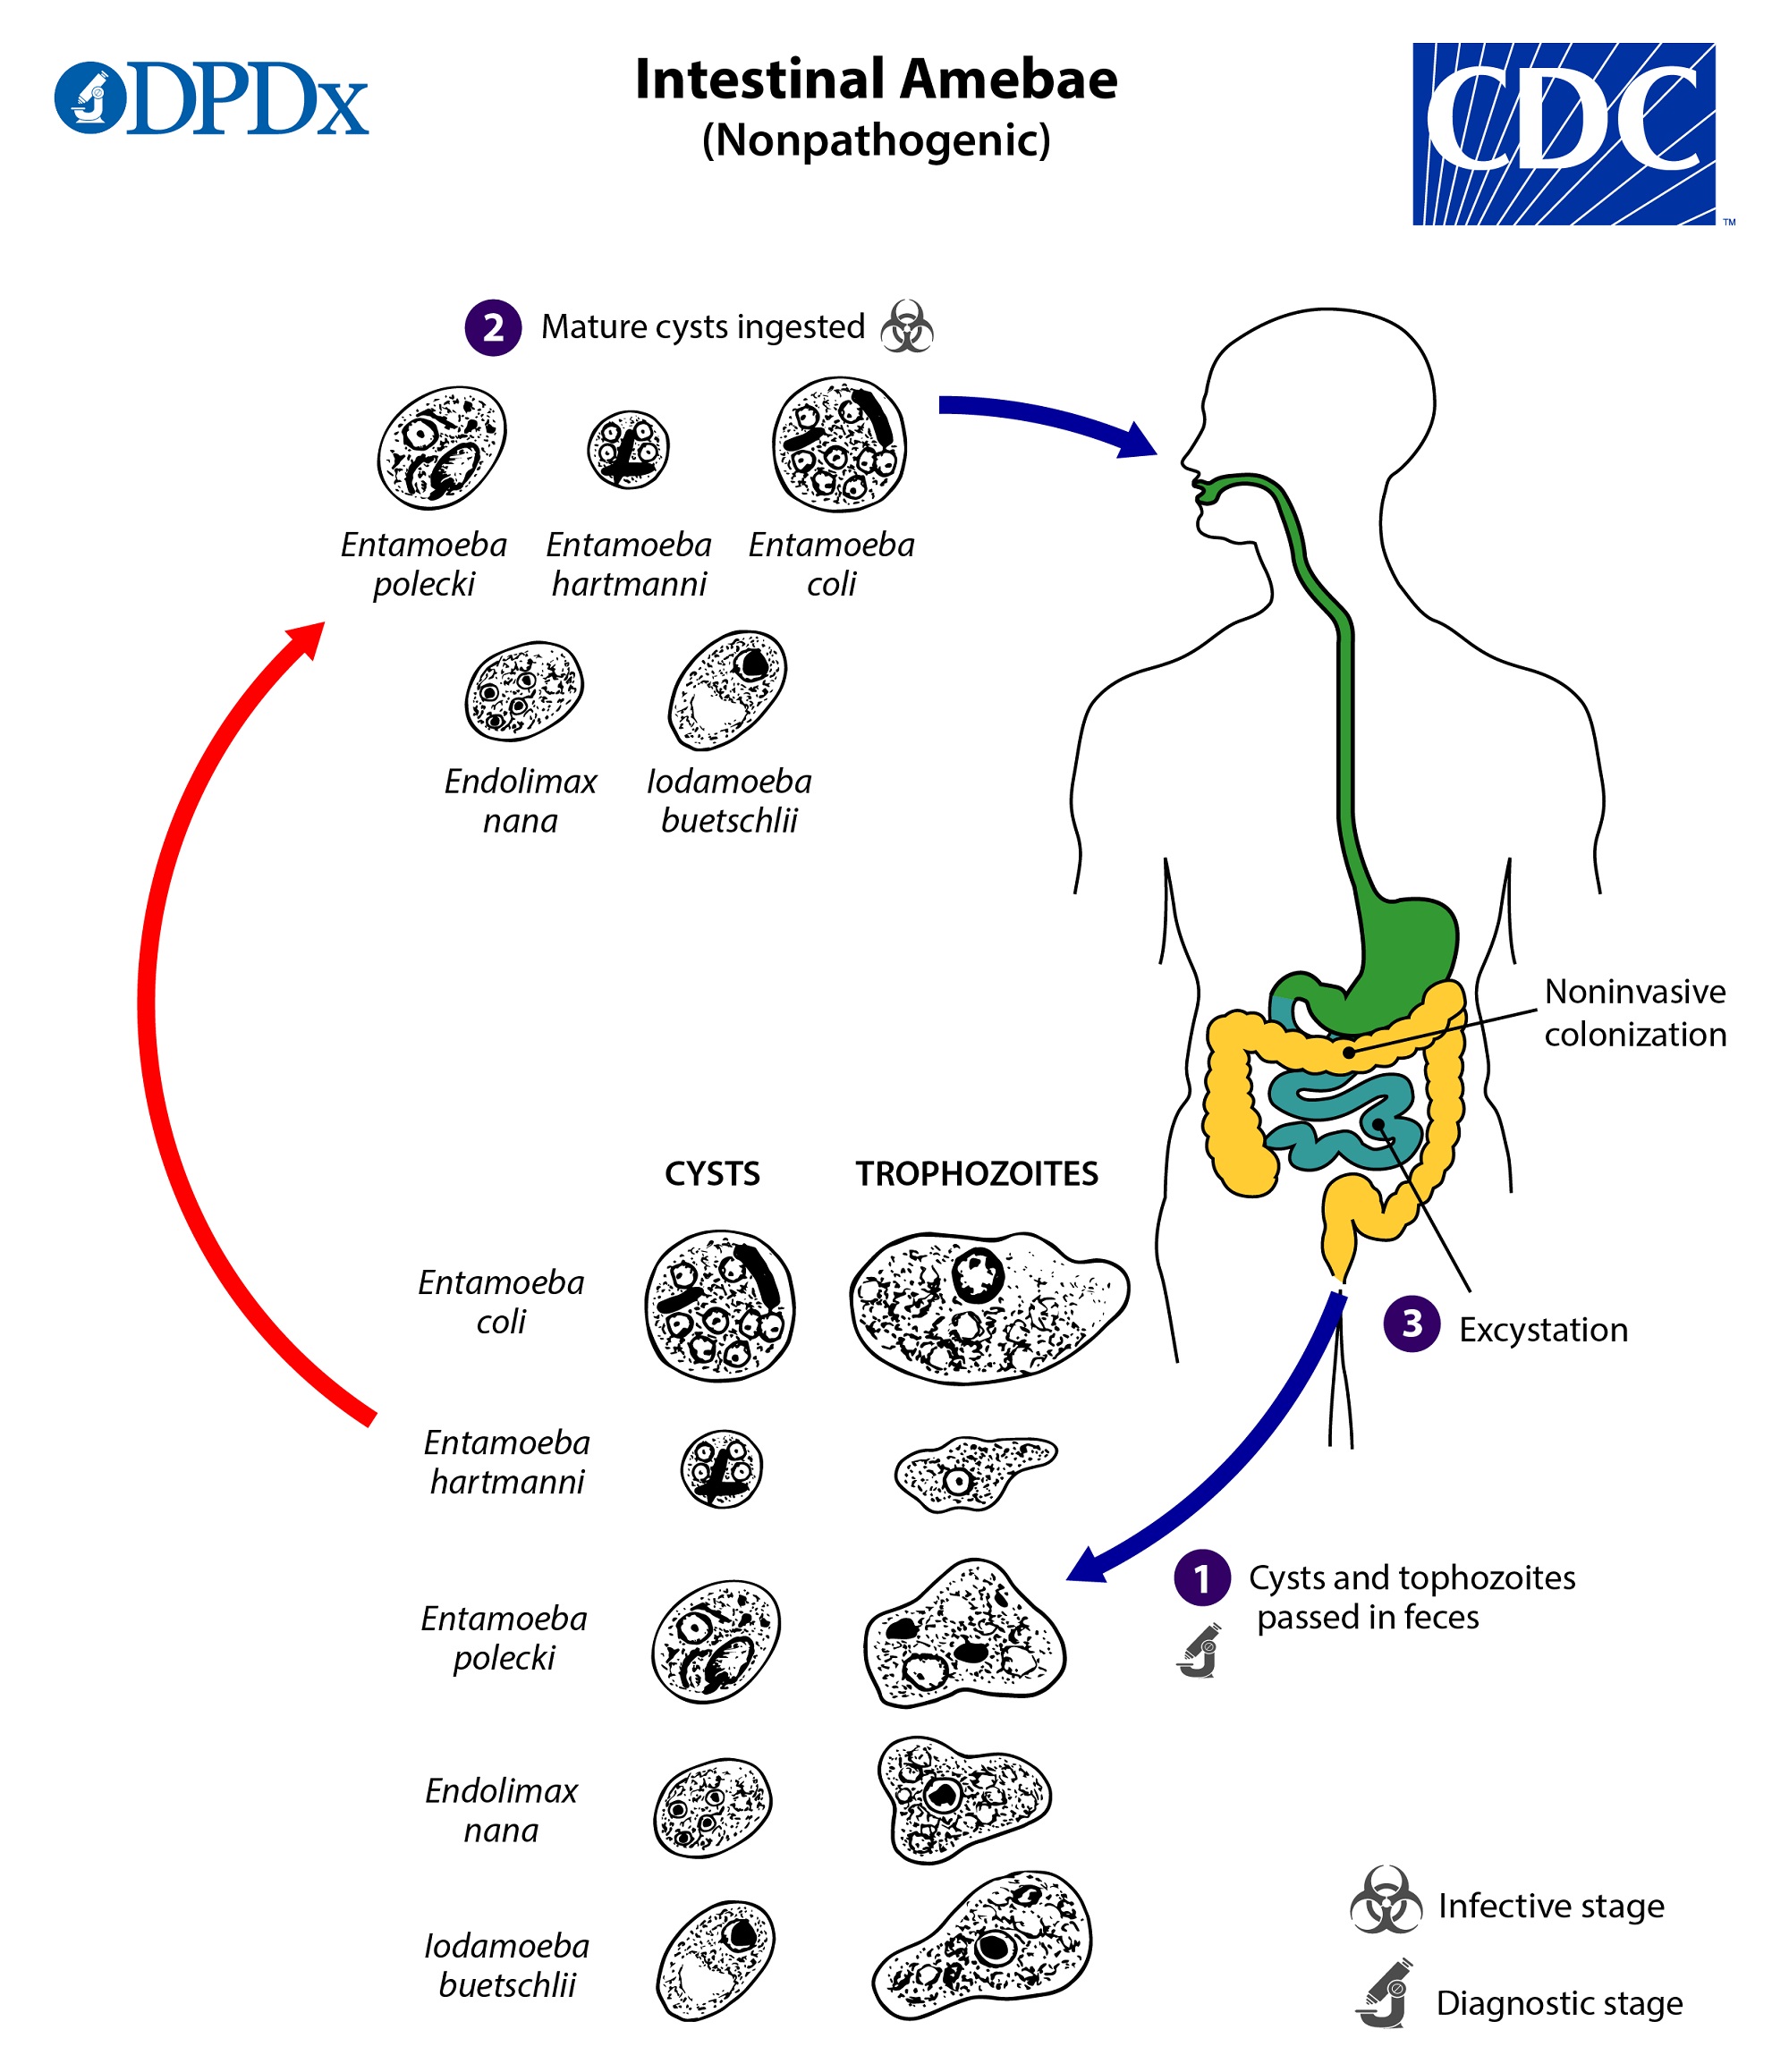 Life cycle of nonpathogenic intestinal amebae include several Entamoeba species (Entamoeba coli, Entamoeba hartmanni, and Entamoeba polecki), Endolimax nana, and Iodamoeba buetschlii (=I. bütschlii).